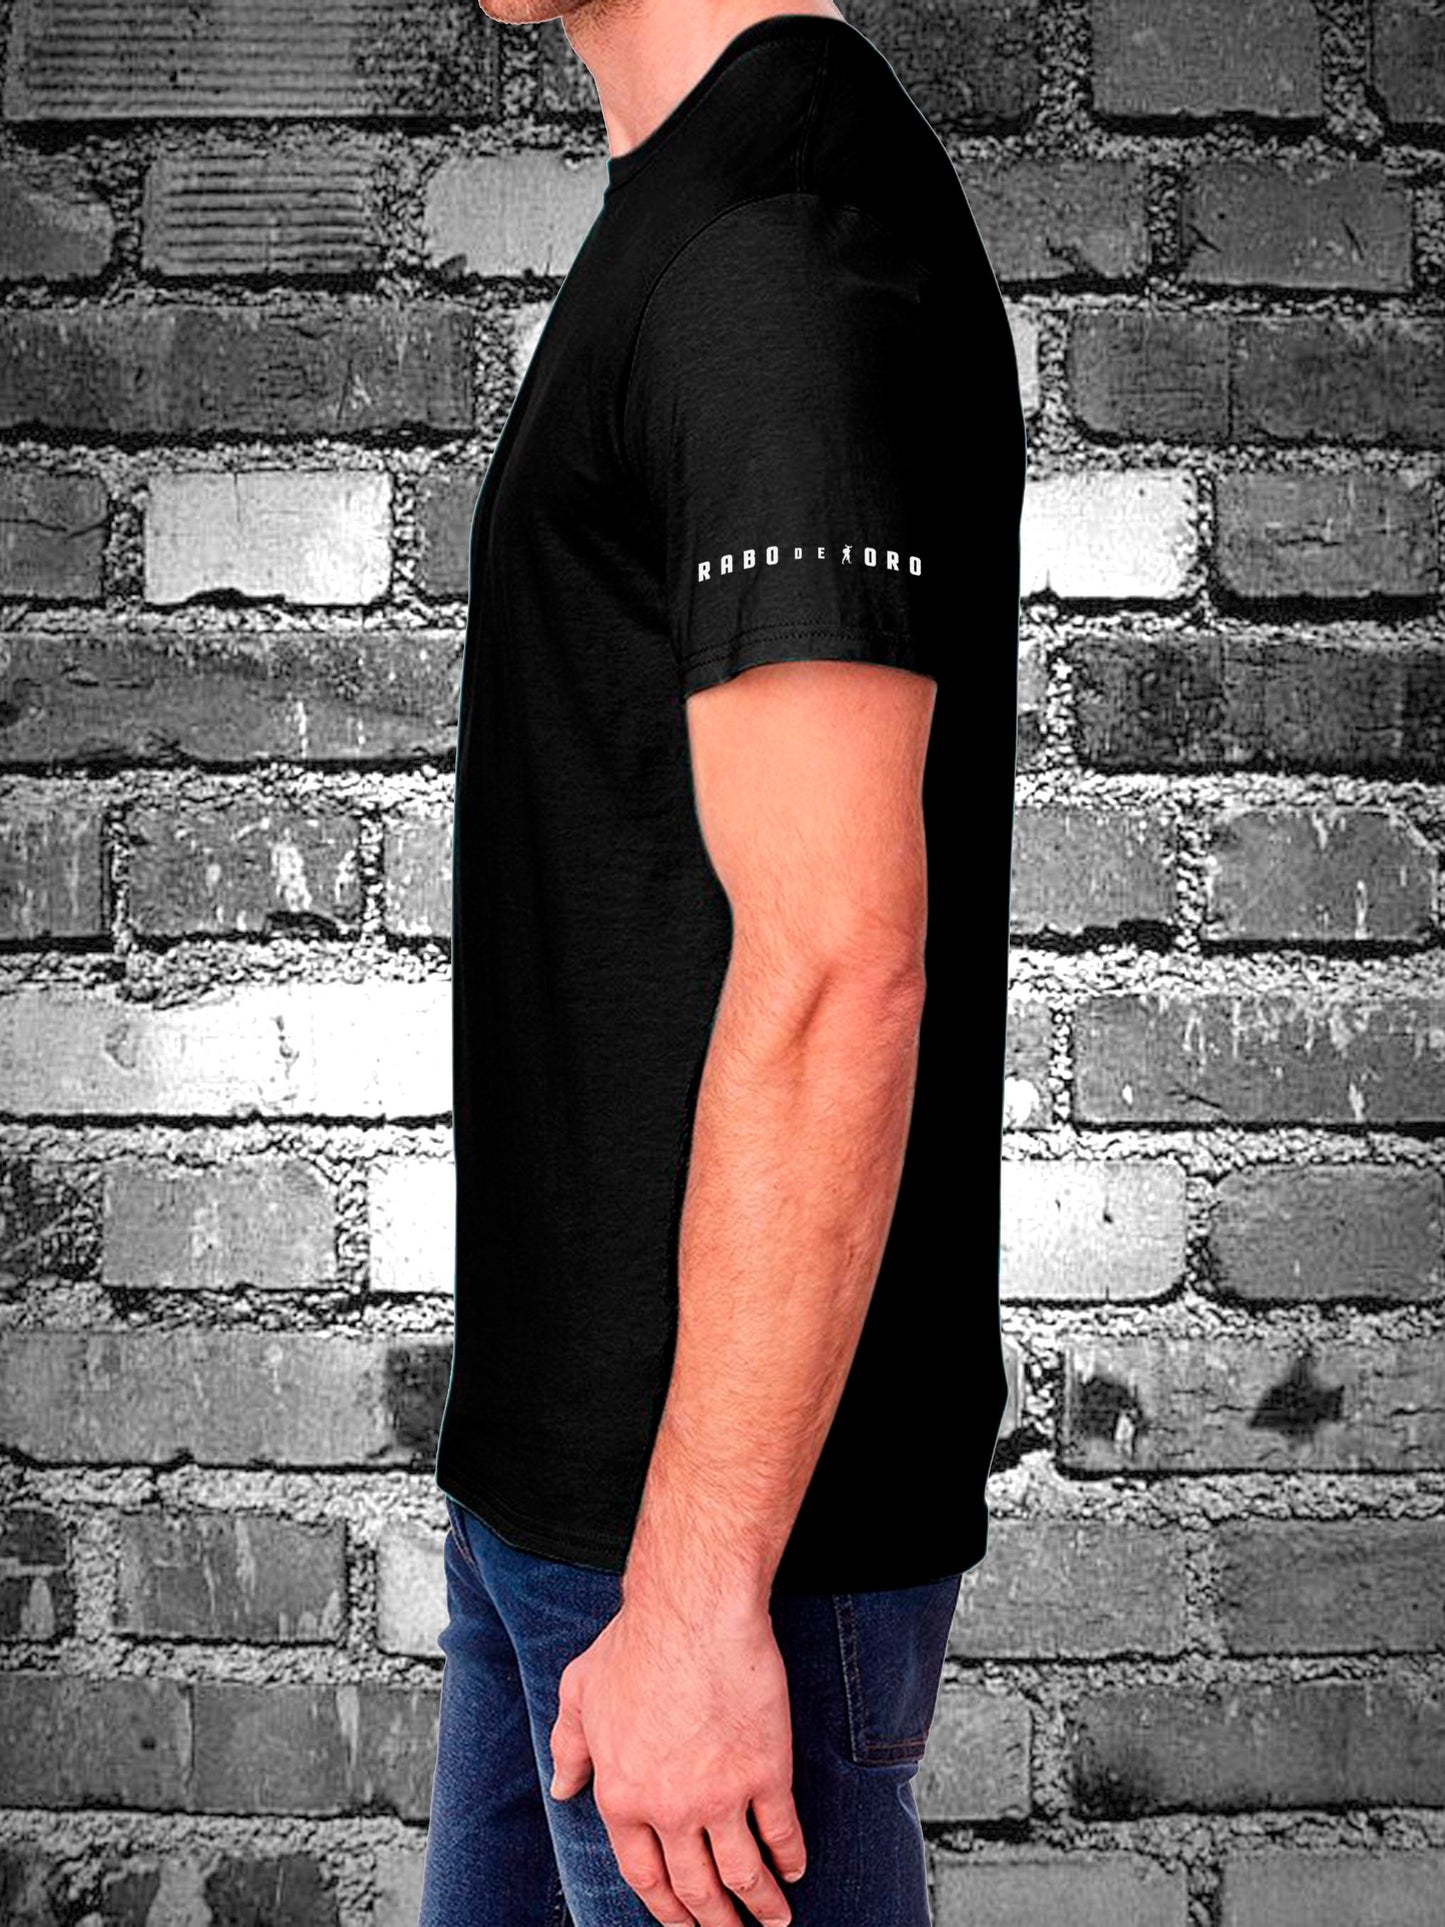 SNIFF IT T-Shirt with Minotaur Armpit Fetish design